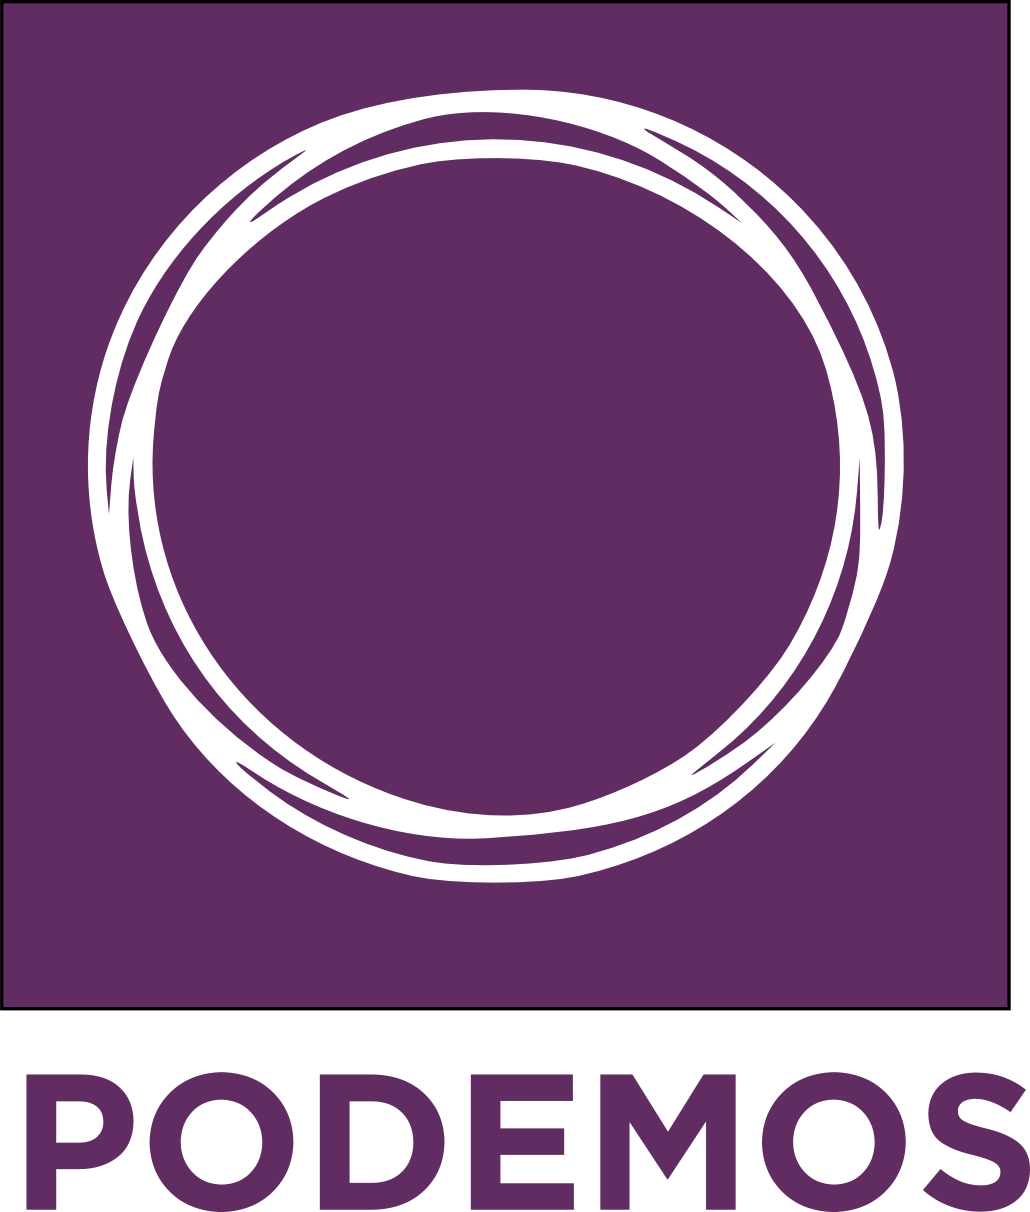 http://4.bp.blogspot.com/-882scyOWOhY/U-ClAXVUAtI/AAAAAAAAFQE/yOL3oVqcjZA/s1600/Logo-Podemos.png